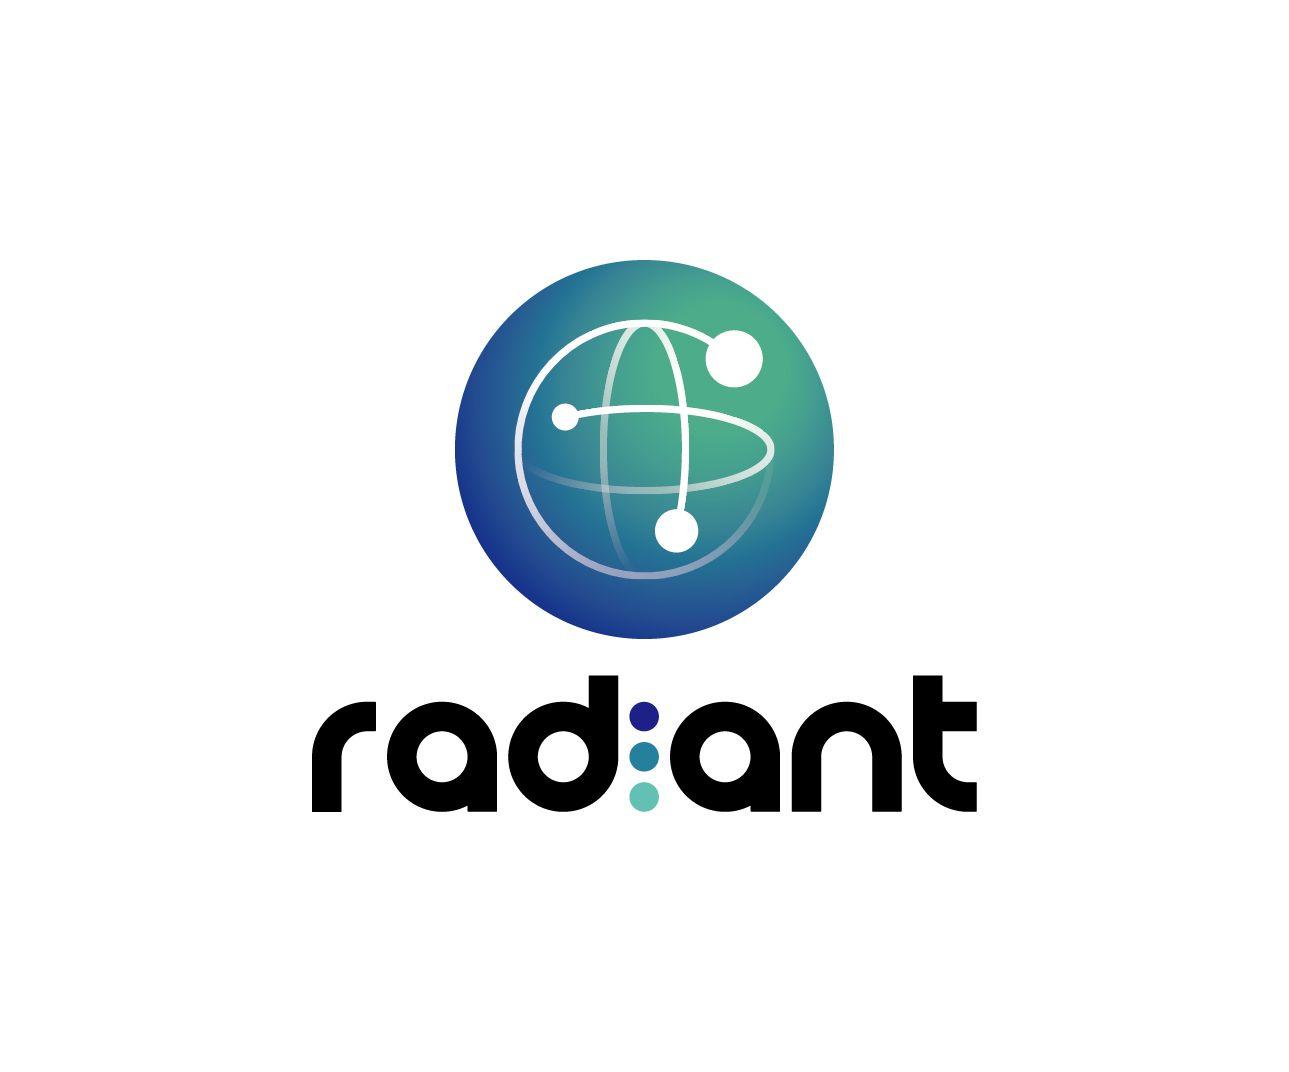 Radiant Logo - Radiant-Logo Design-2016 | JamesChou Produce | Logos design, Logos ...